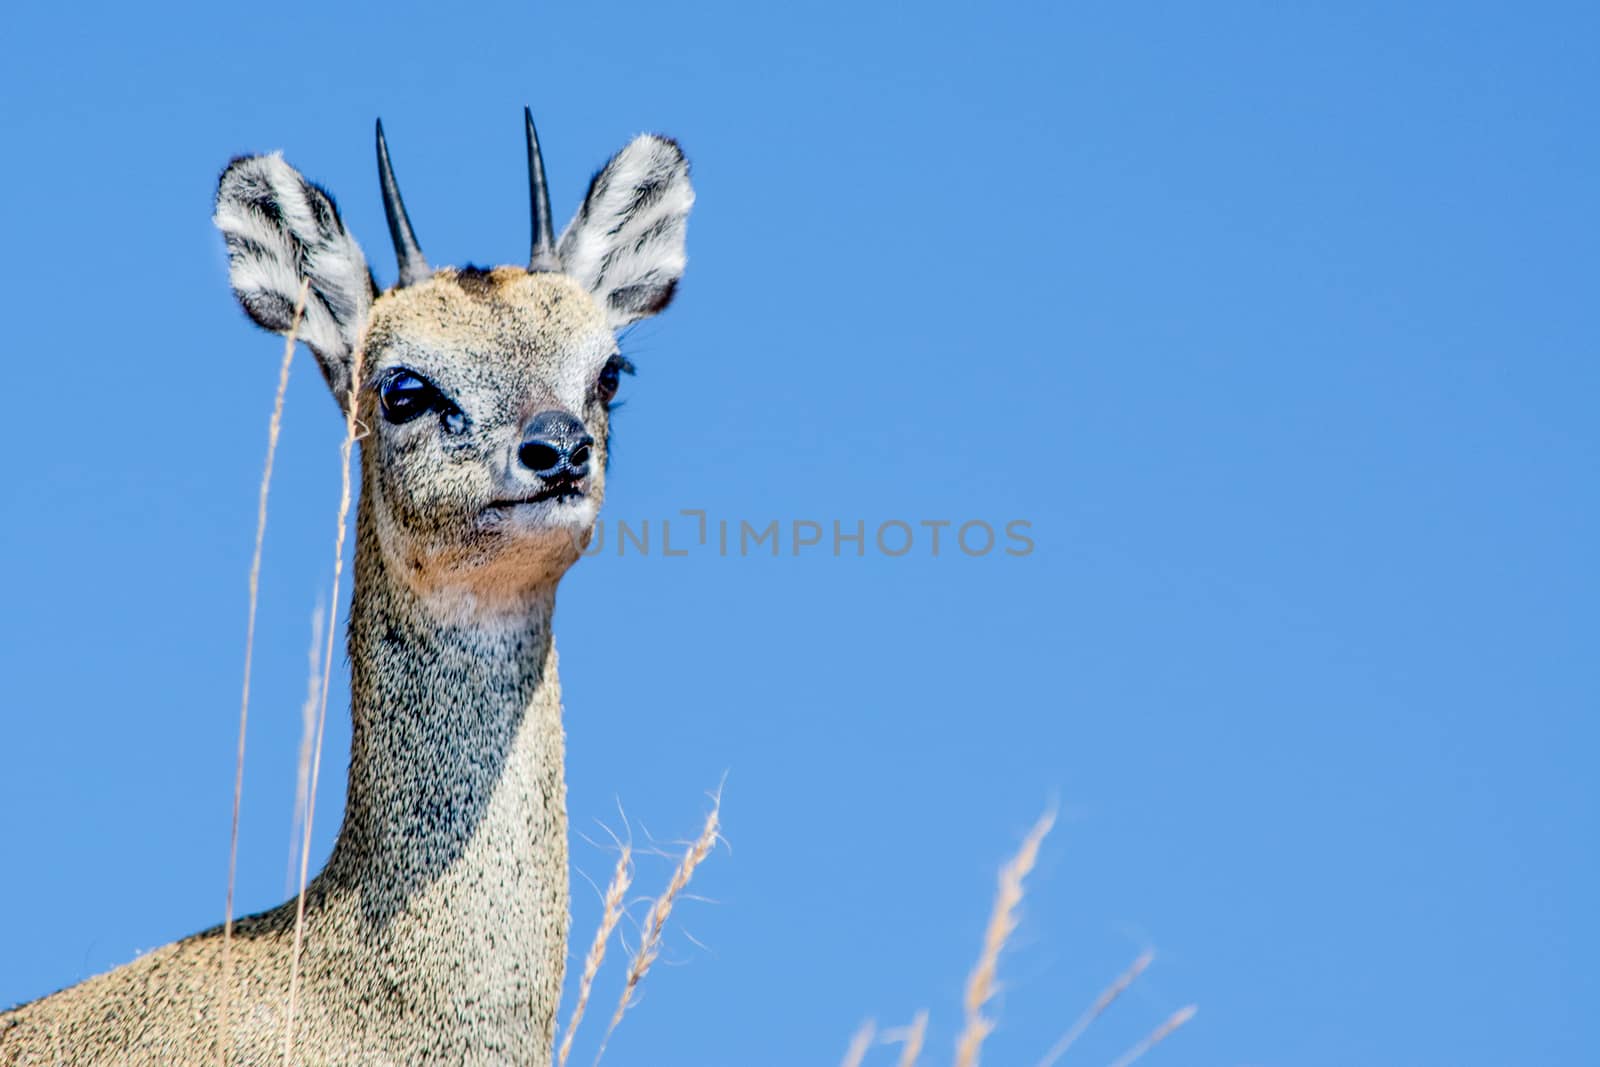 Klipspringer antelope (Oreotragus oreotragus) on blue sky in the background. Plenty of copy space. by kb79